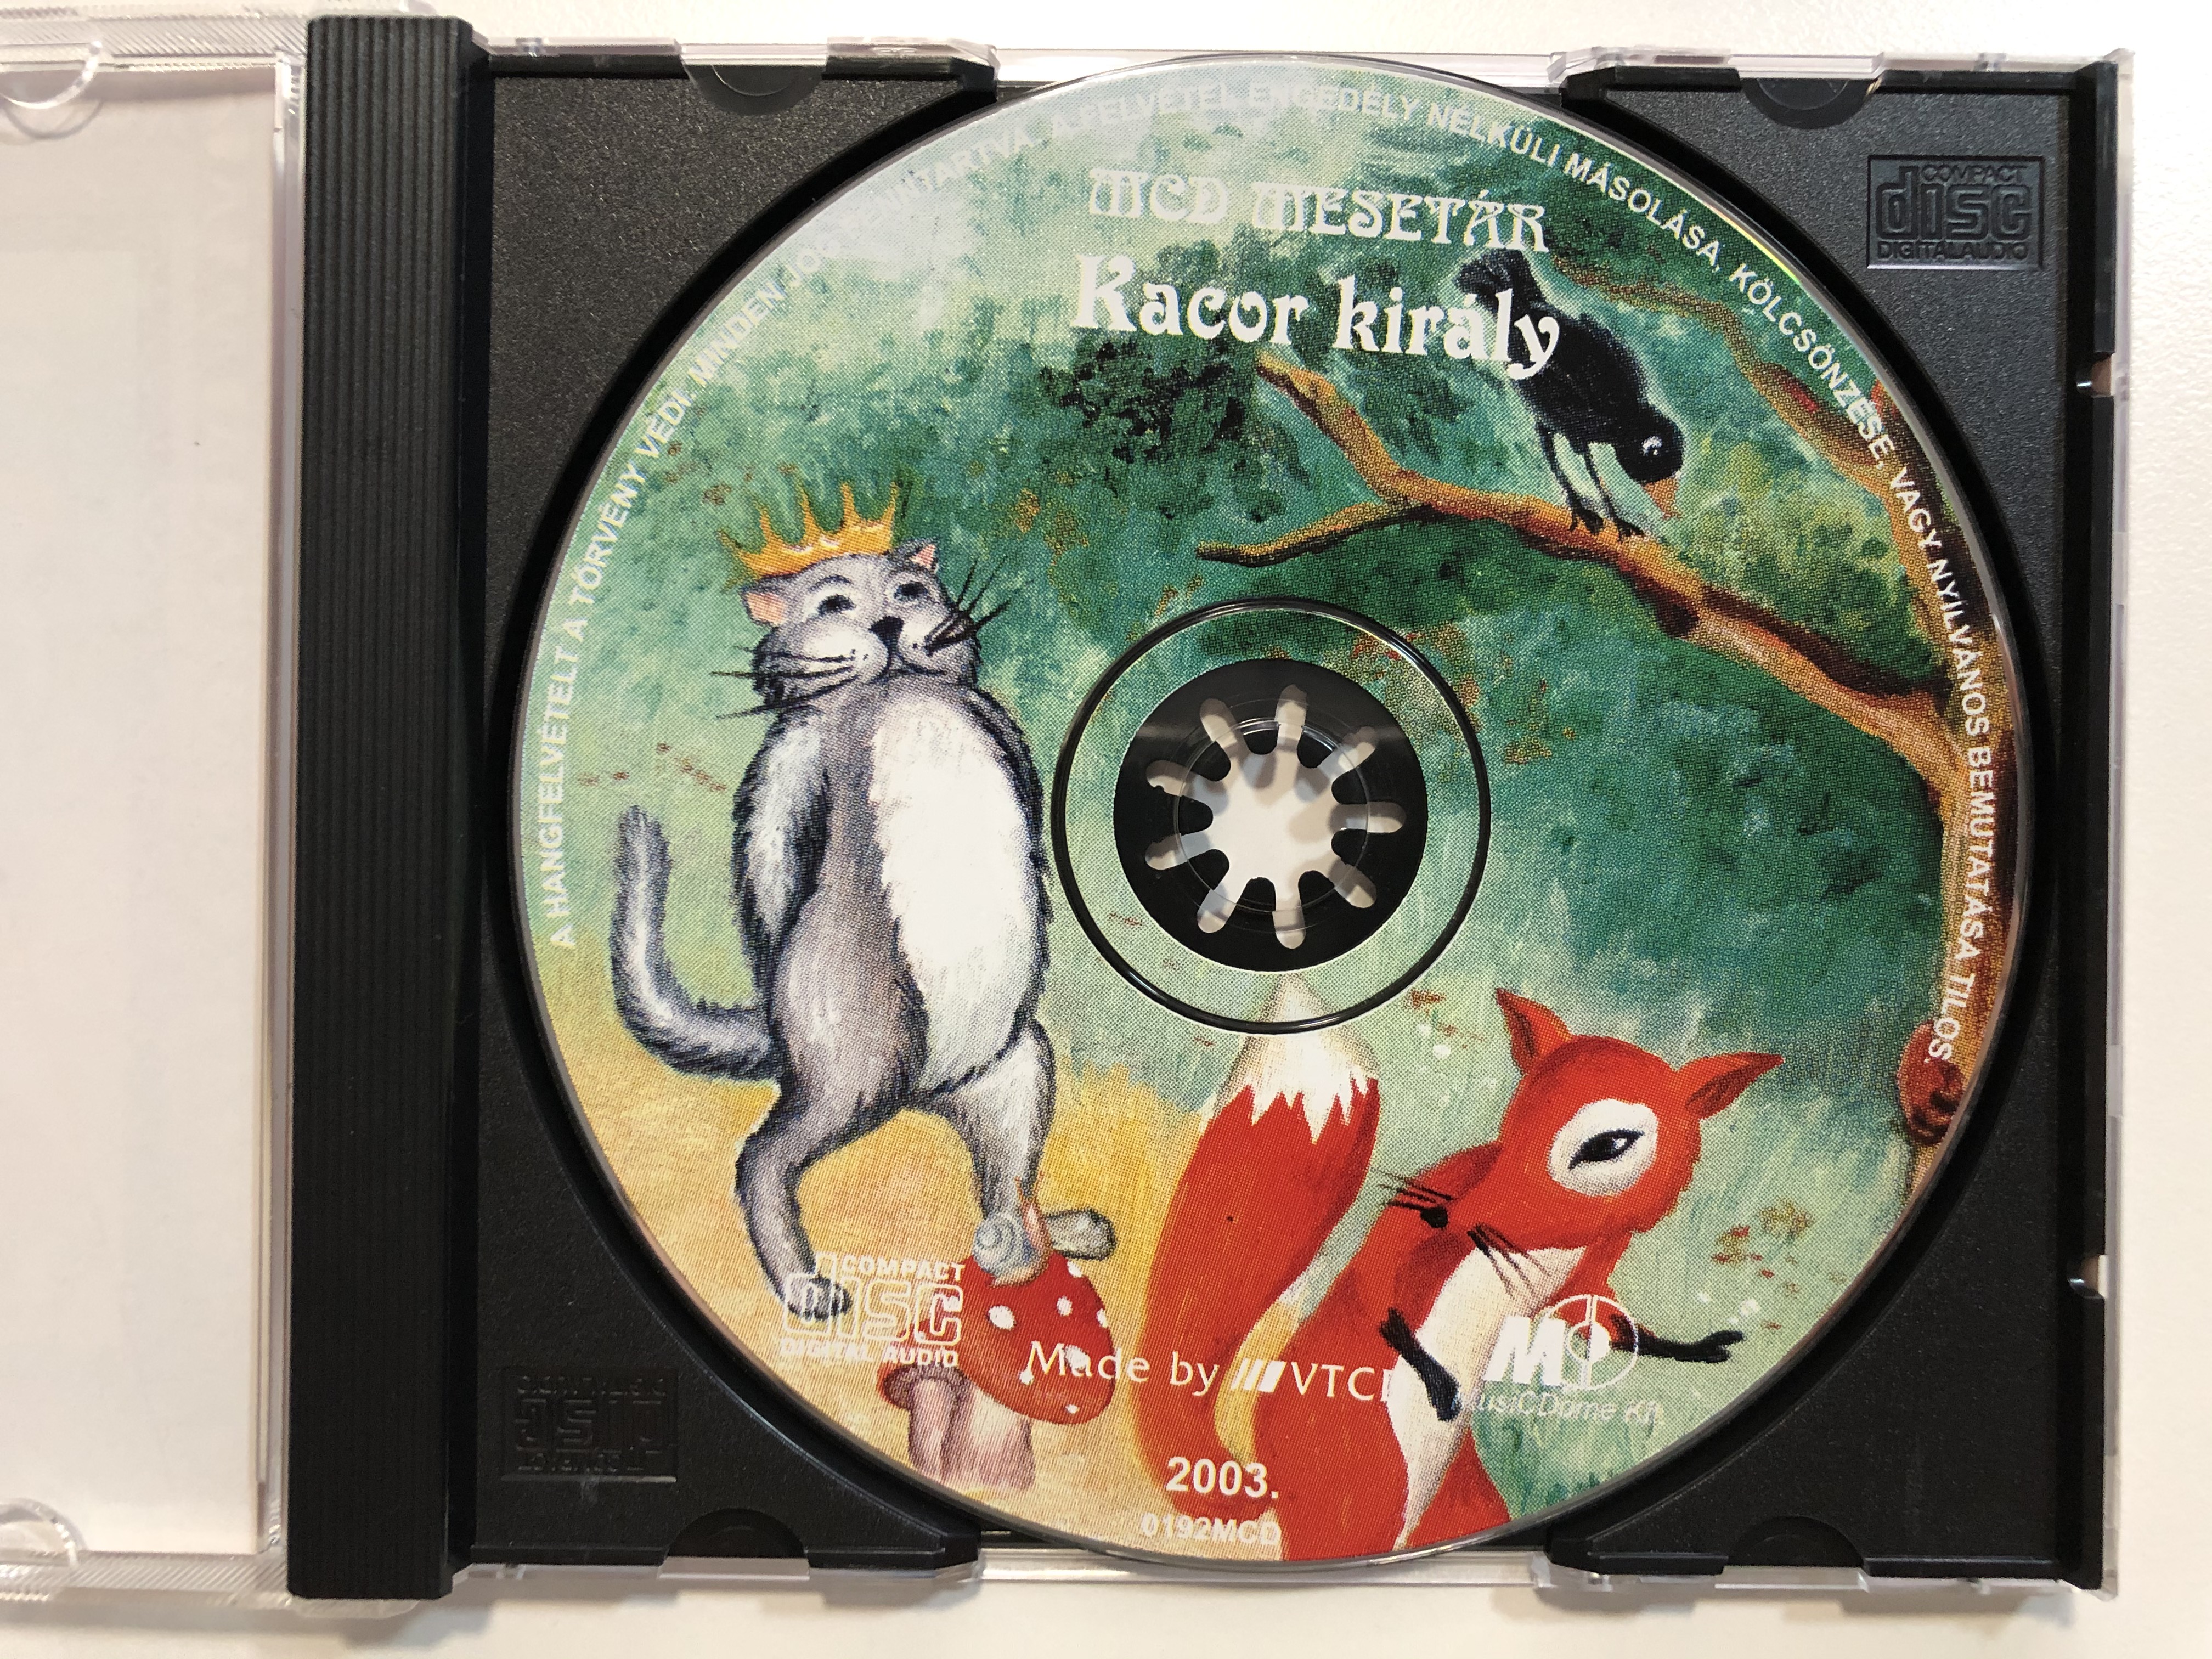 mcd-mesetar-kacor-kiraly-audio-cd-2003-0192mcd-3-.jpg